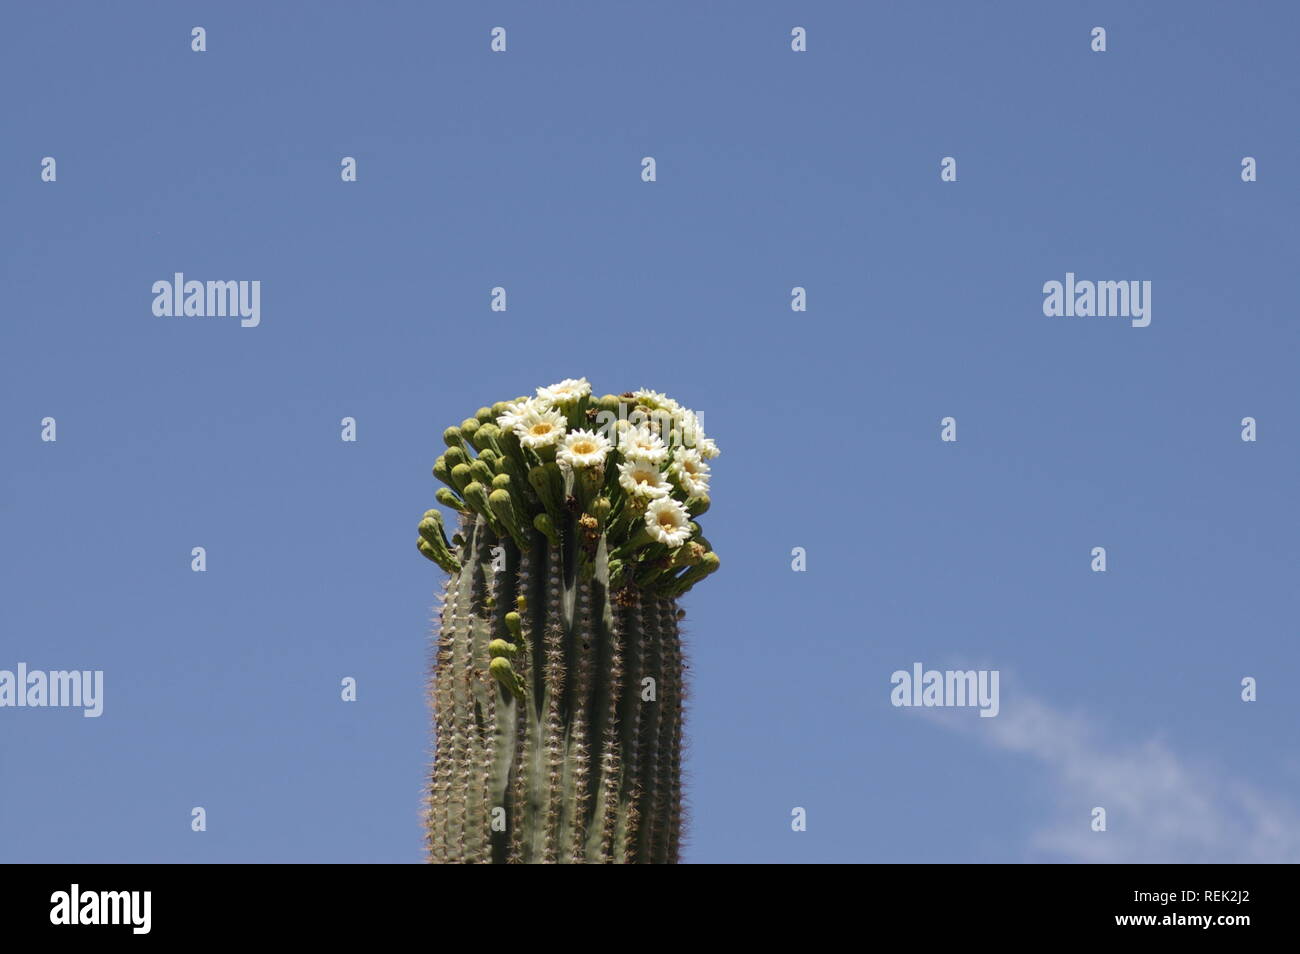 Saguaro cactus (Carnegiea gigantea) in bloom Stock Photo